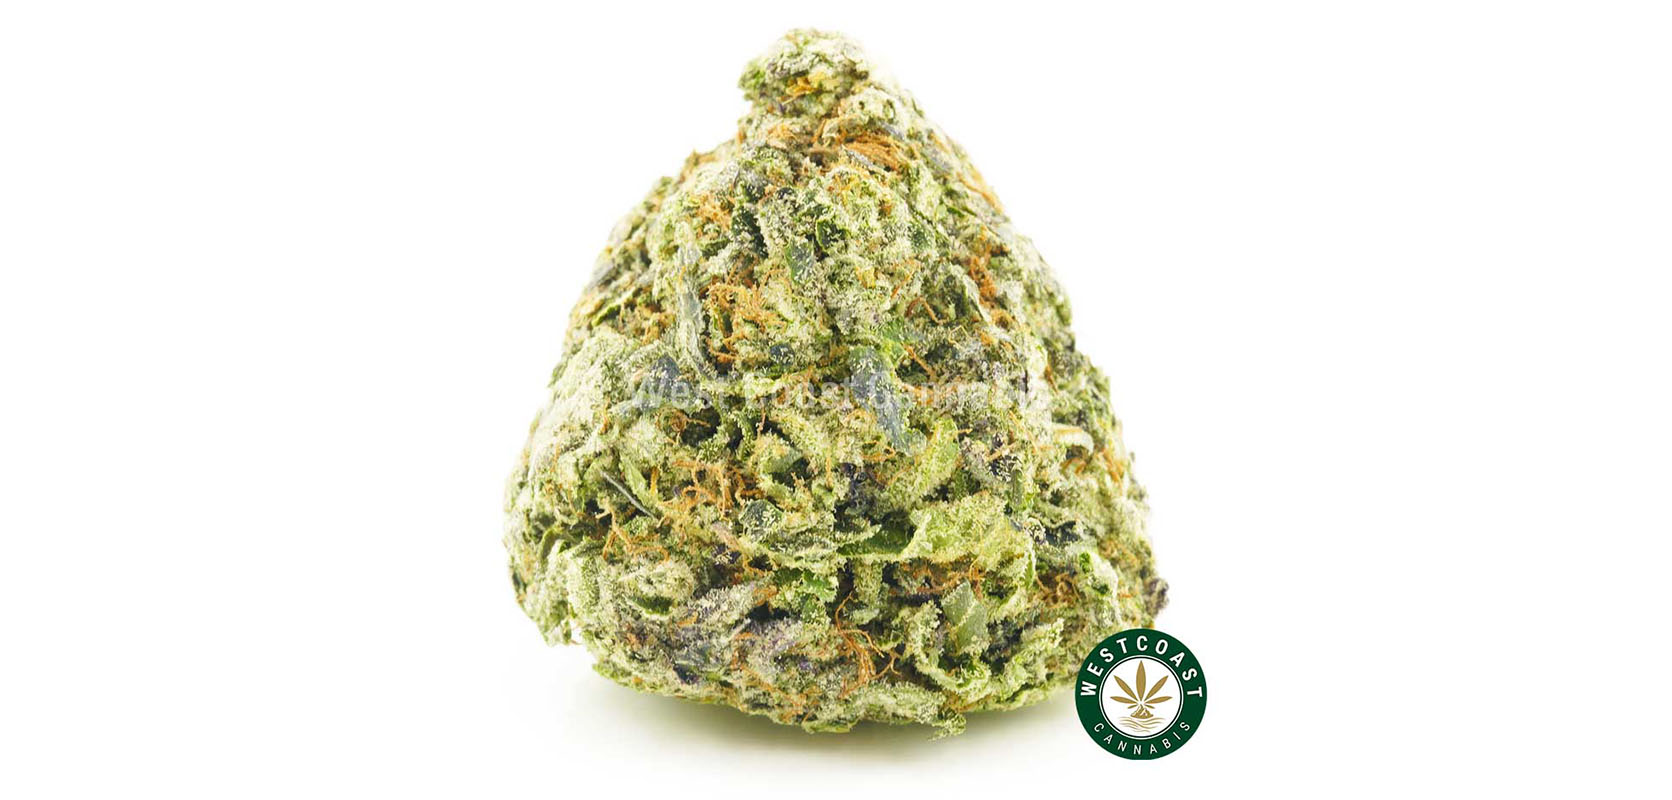 buy green crack weed strain sativa online. Mail order marijuana dispensary in BC. 